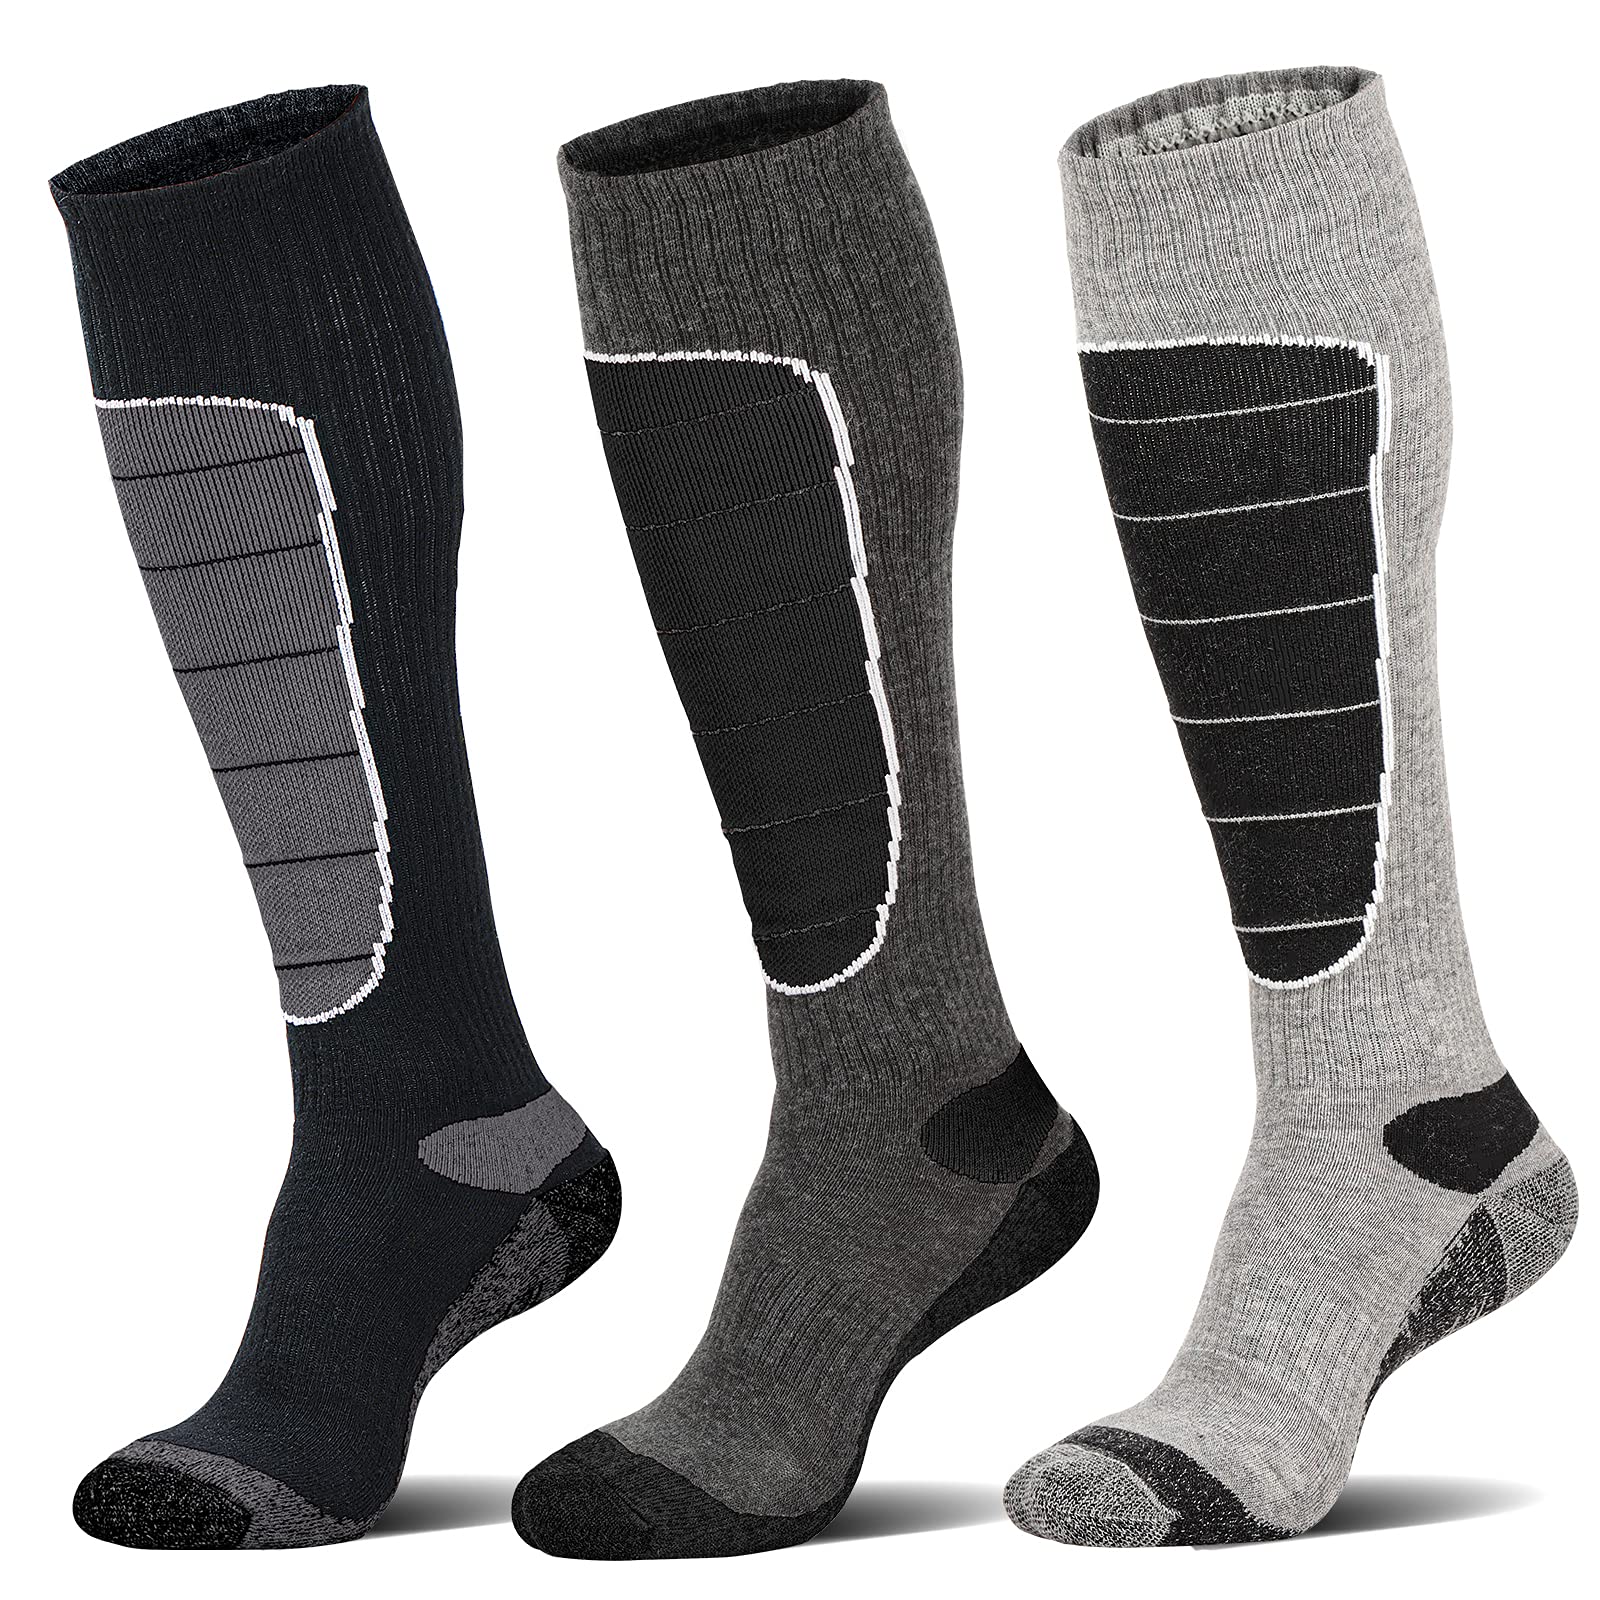 Merino Wool Ski Socks, Cold Weather Socks for Snowboarding, Snow, Winter,  Thermal Knee-high Warm Socks, Hunting X-Large Black Dark Grey Grey (3 Pairs)